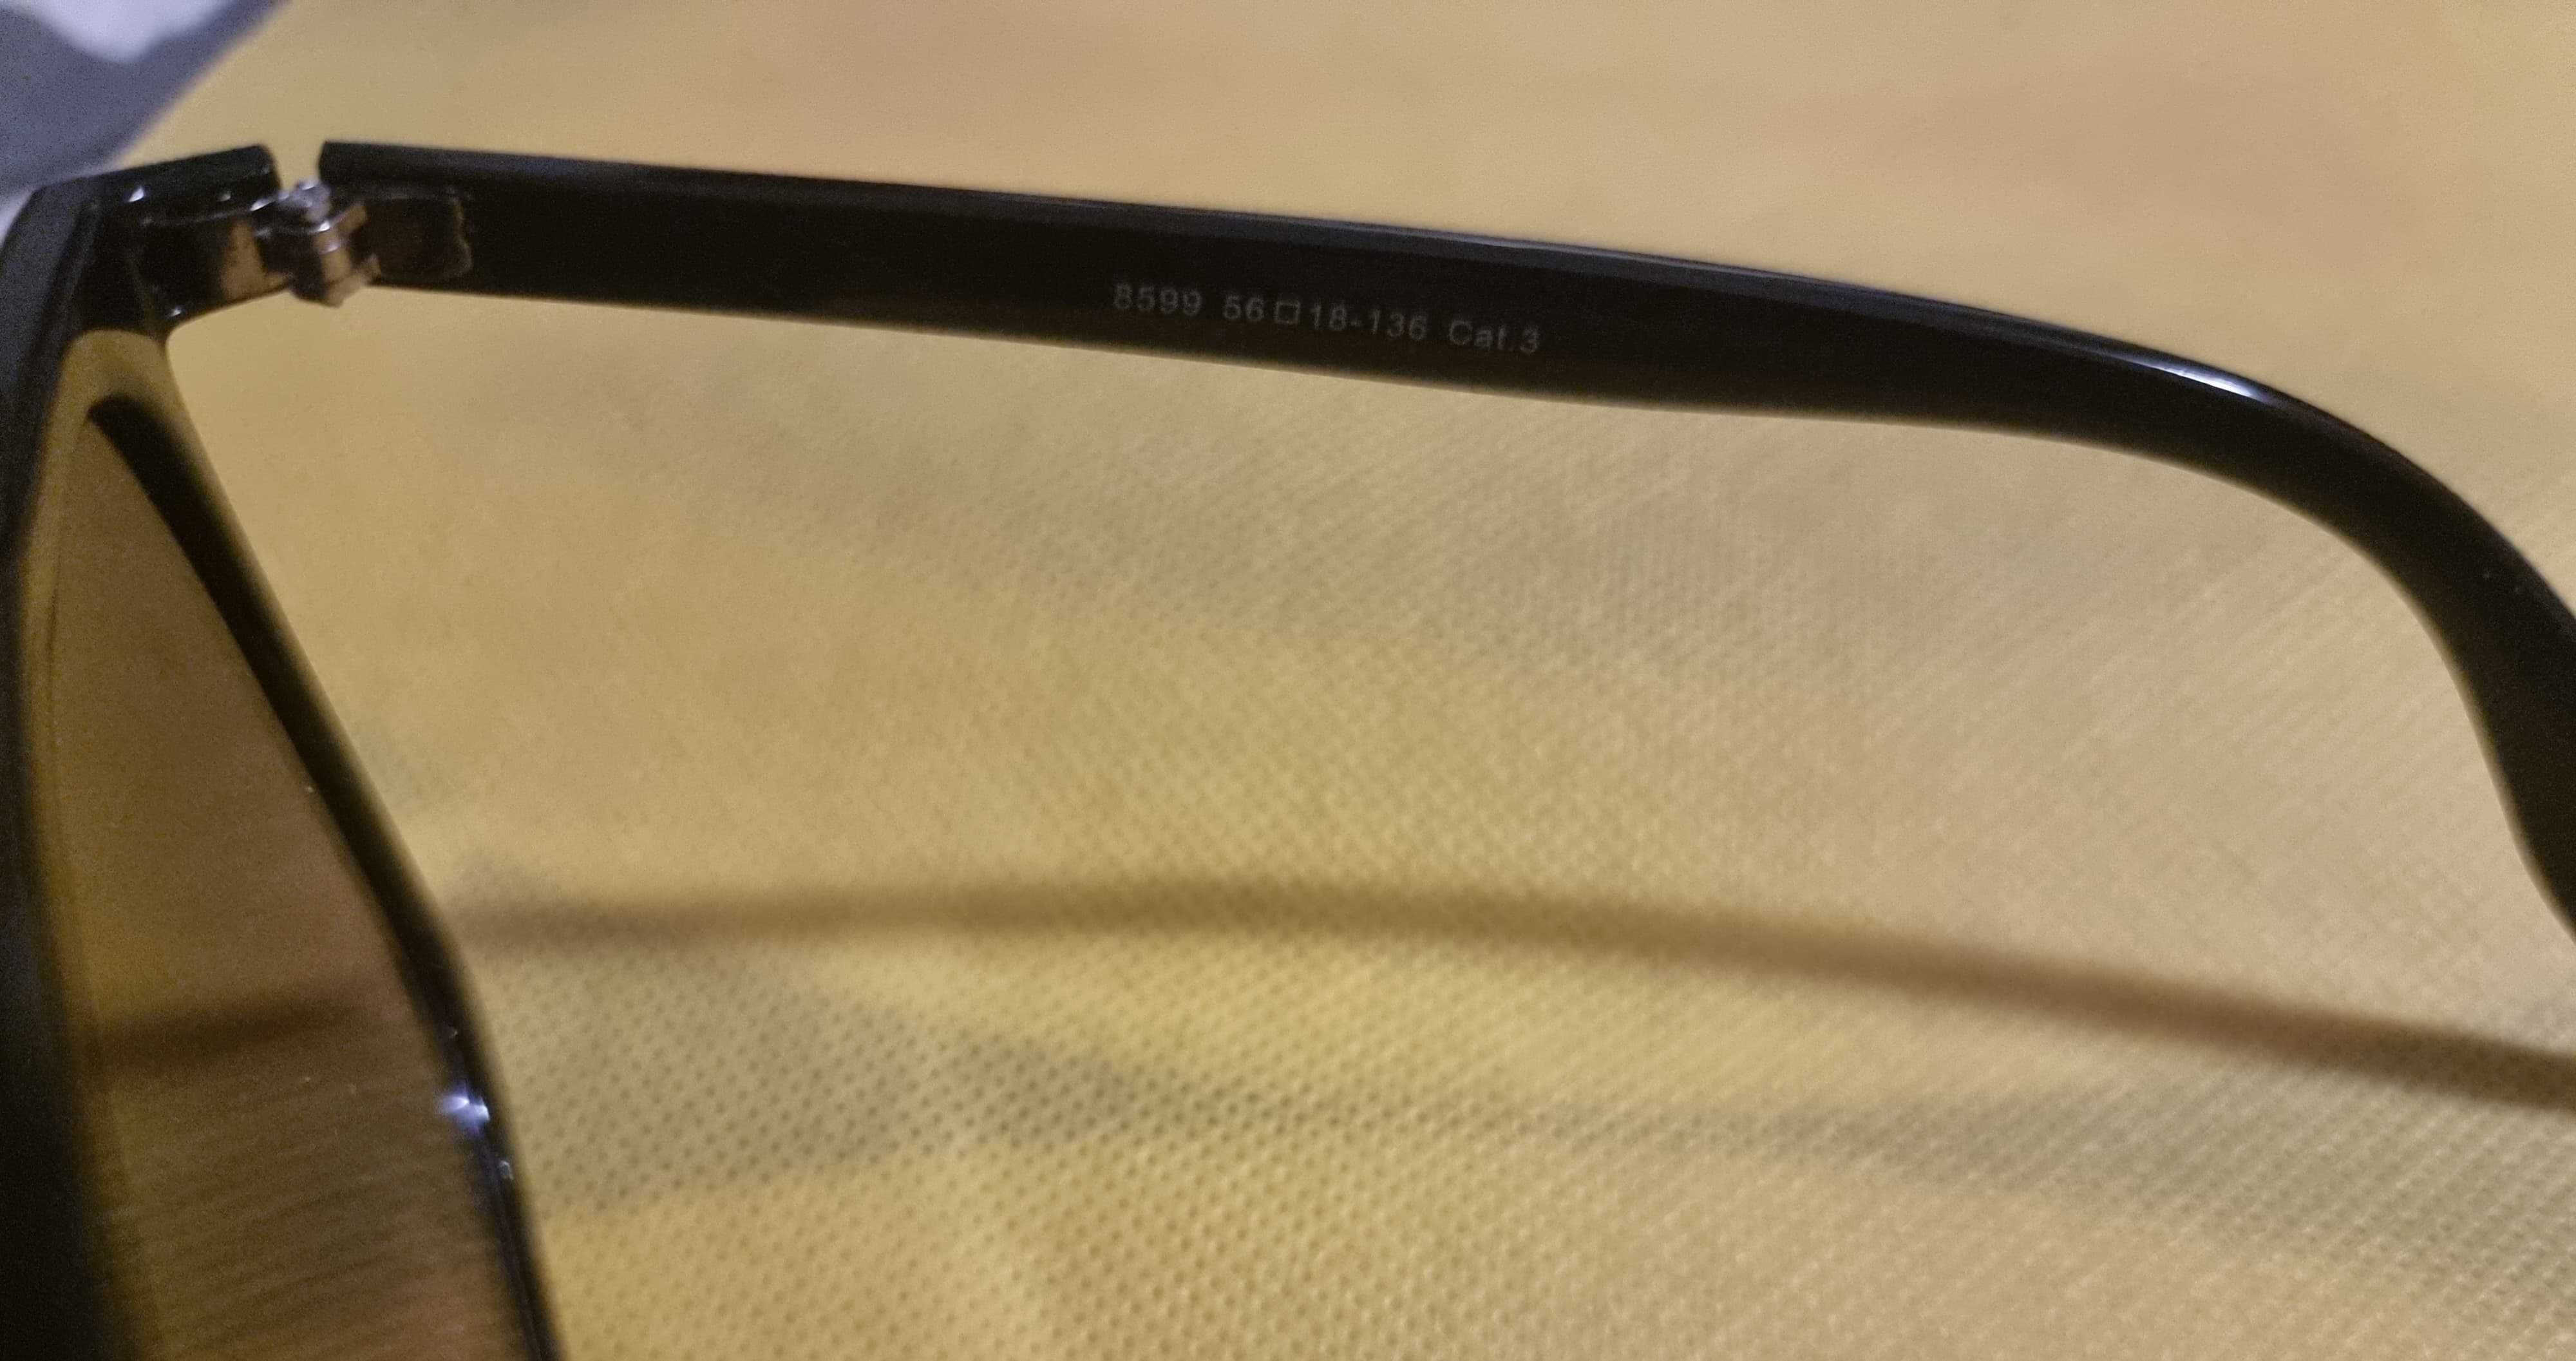 Ochelari de soare Givenchy lentila degrade